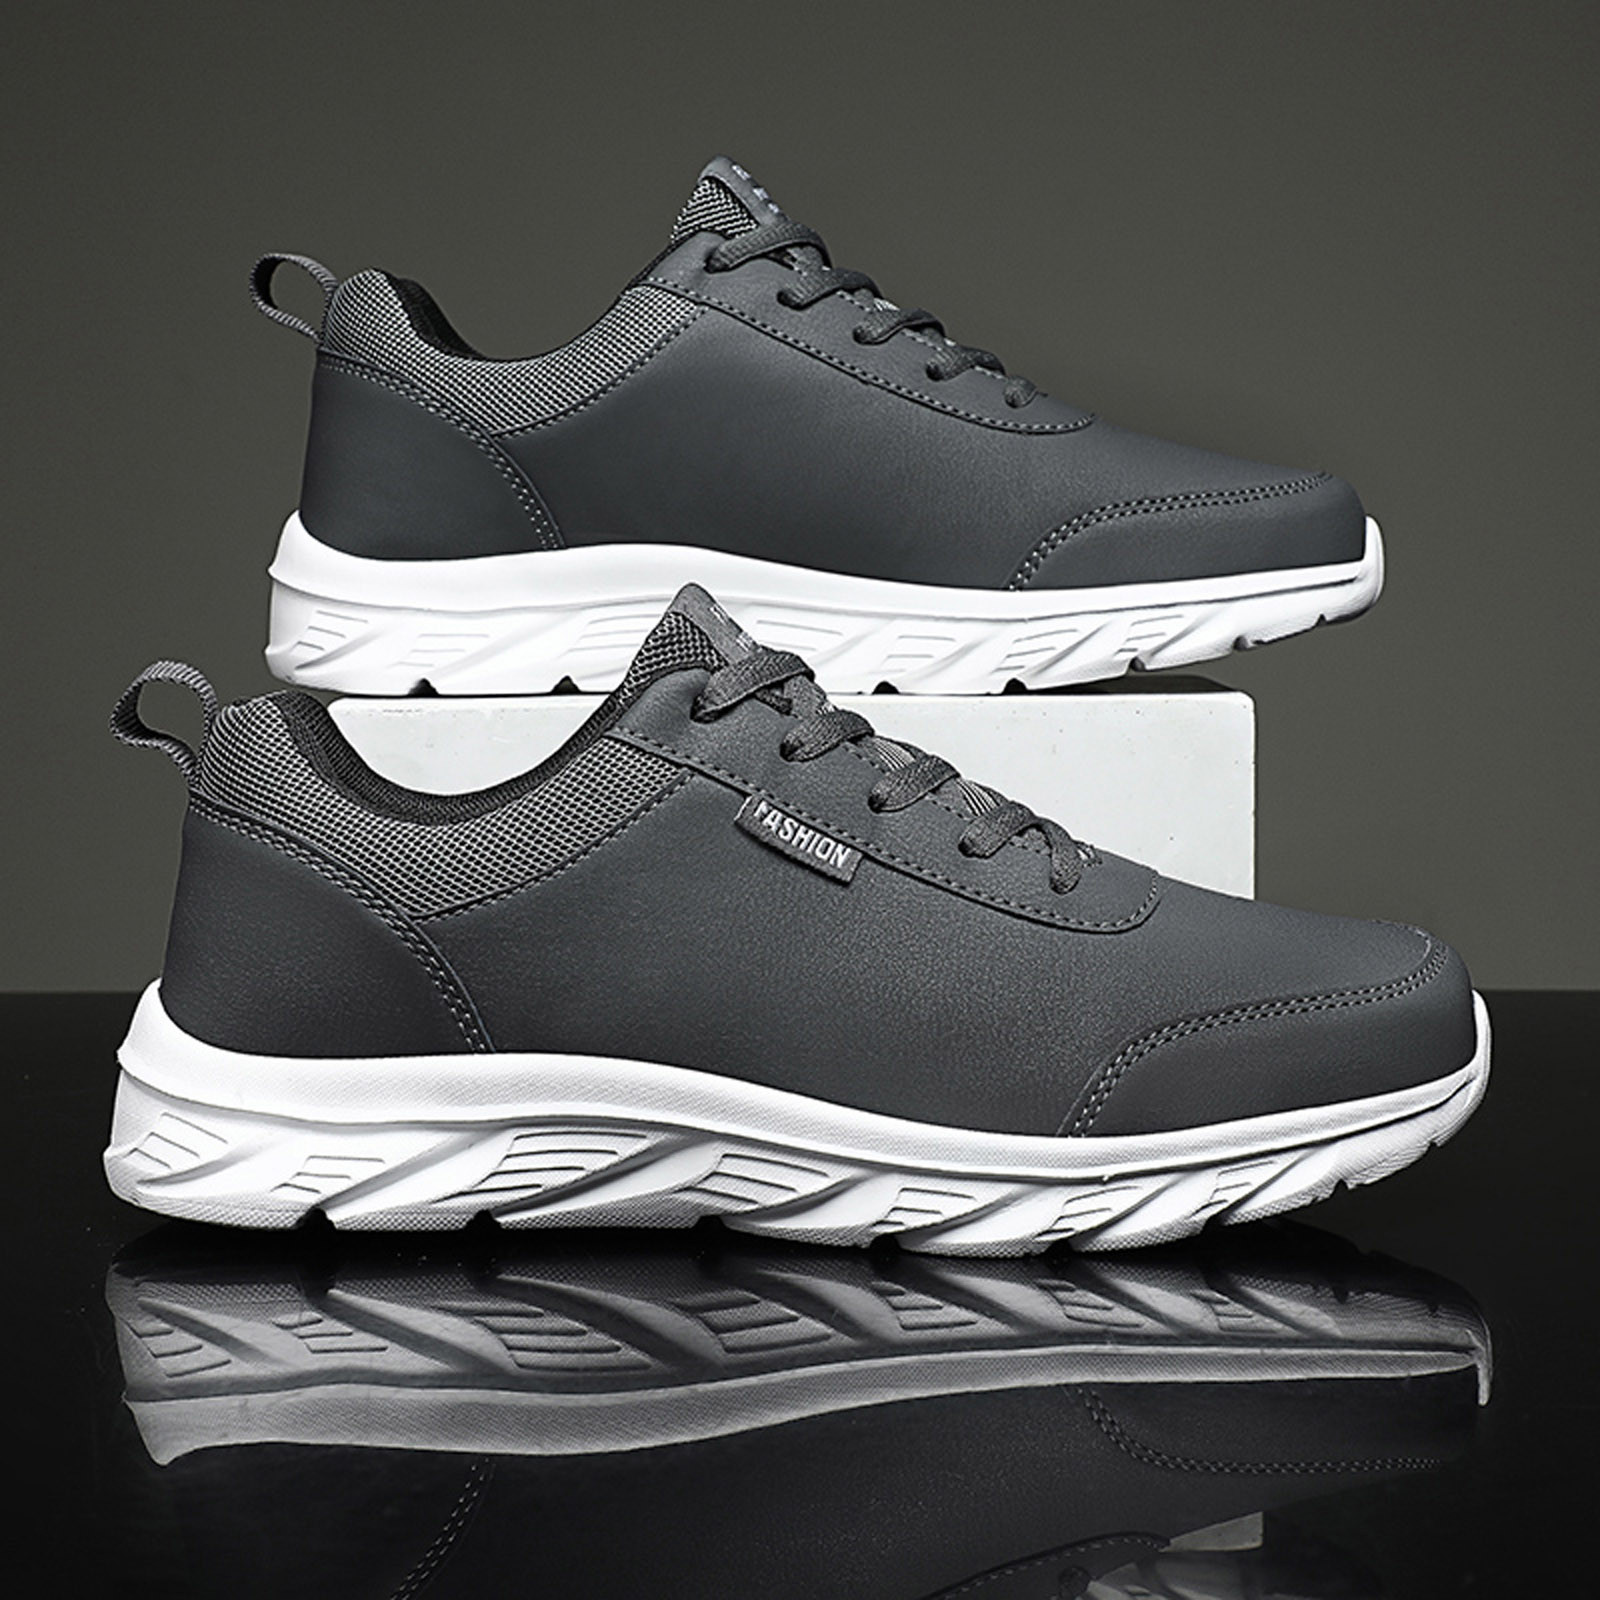 PEASKJP Mens Golf Shoes Men Soft Flat Breathable Comfortable Non Slip Sneaker Gym Tennis Shoes Grey 8.5 - image 4 of 5